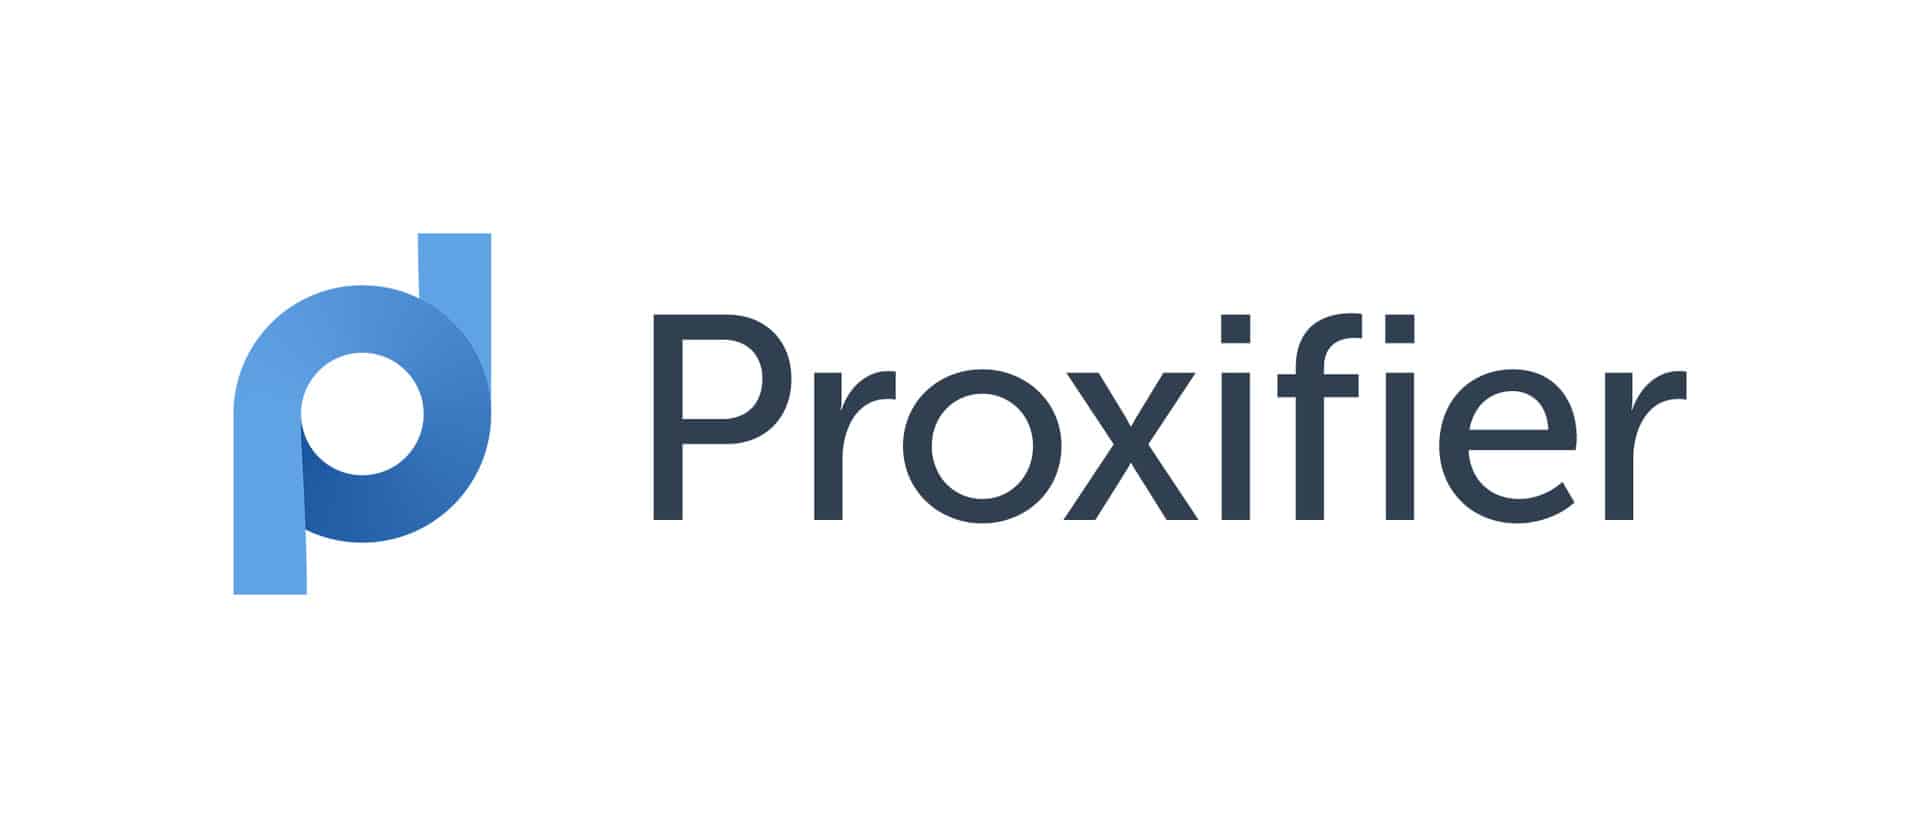 Proxifier Fineproxy Glossary